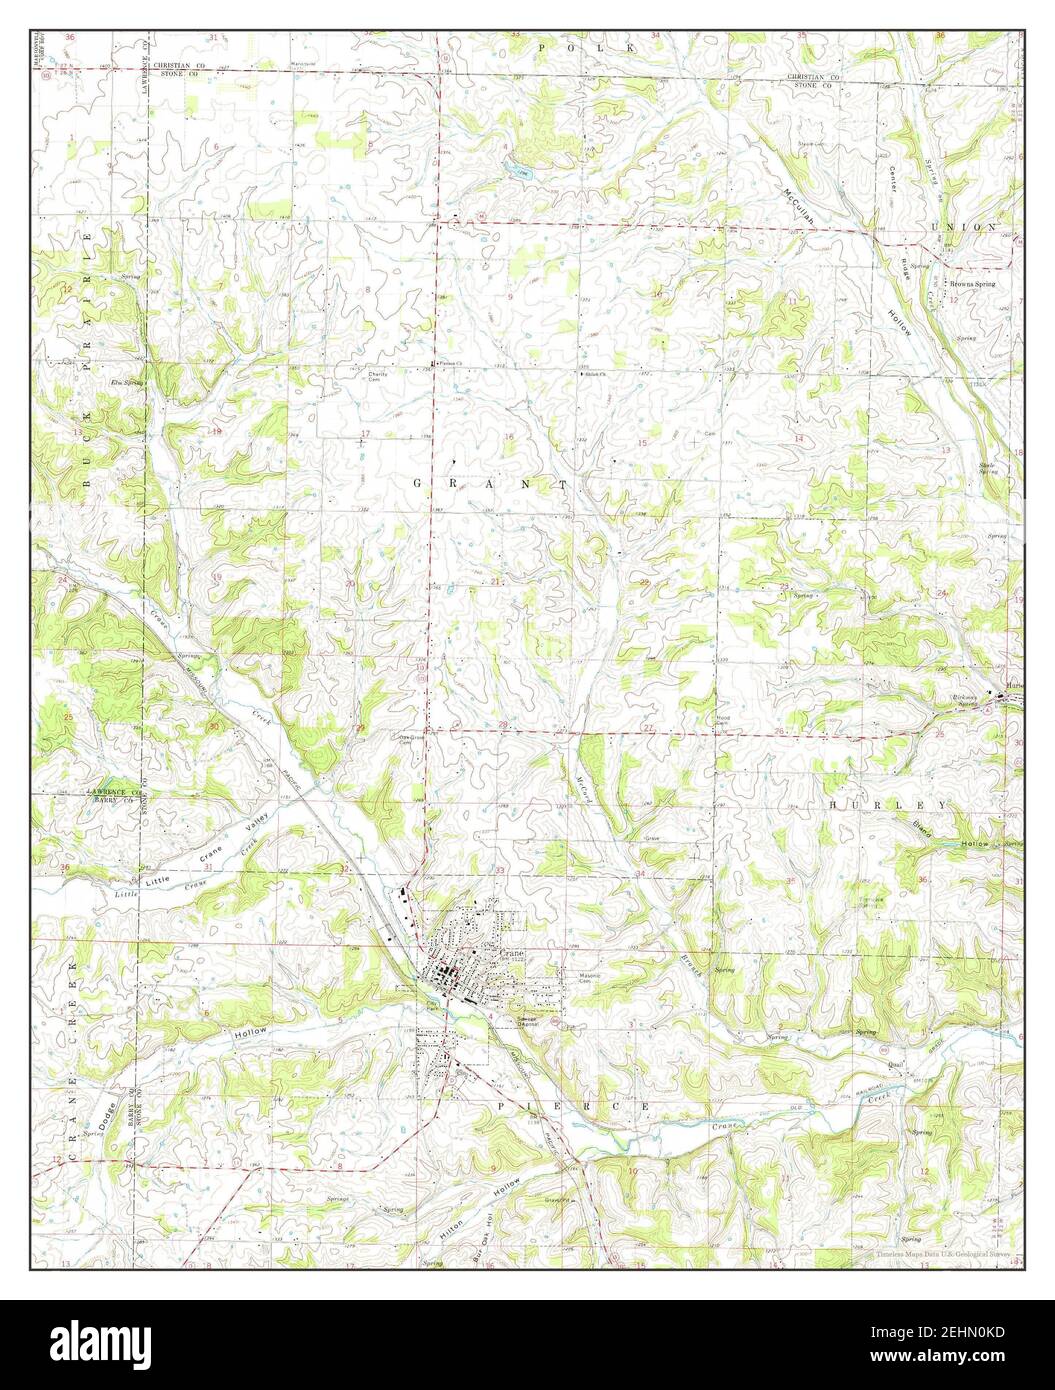 Crane, Missouri, map 1974, 1:24000, United States of America by Timeless Maps, data U.S. Geological Survey Stock Photo